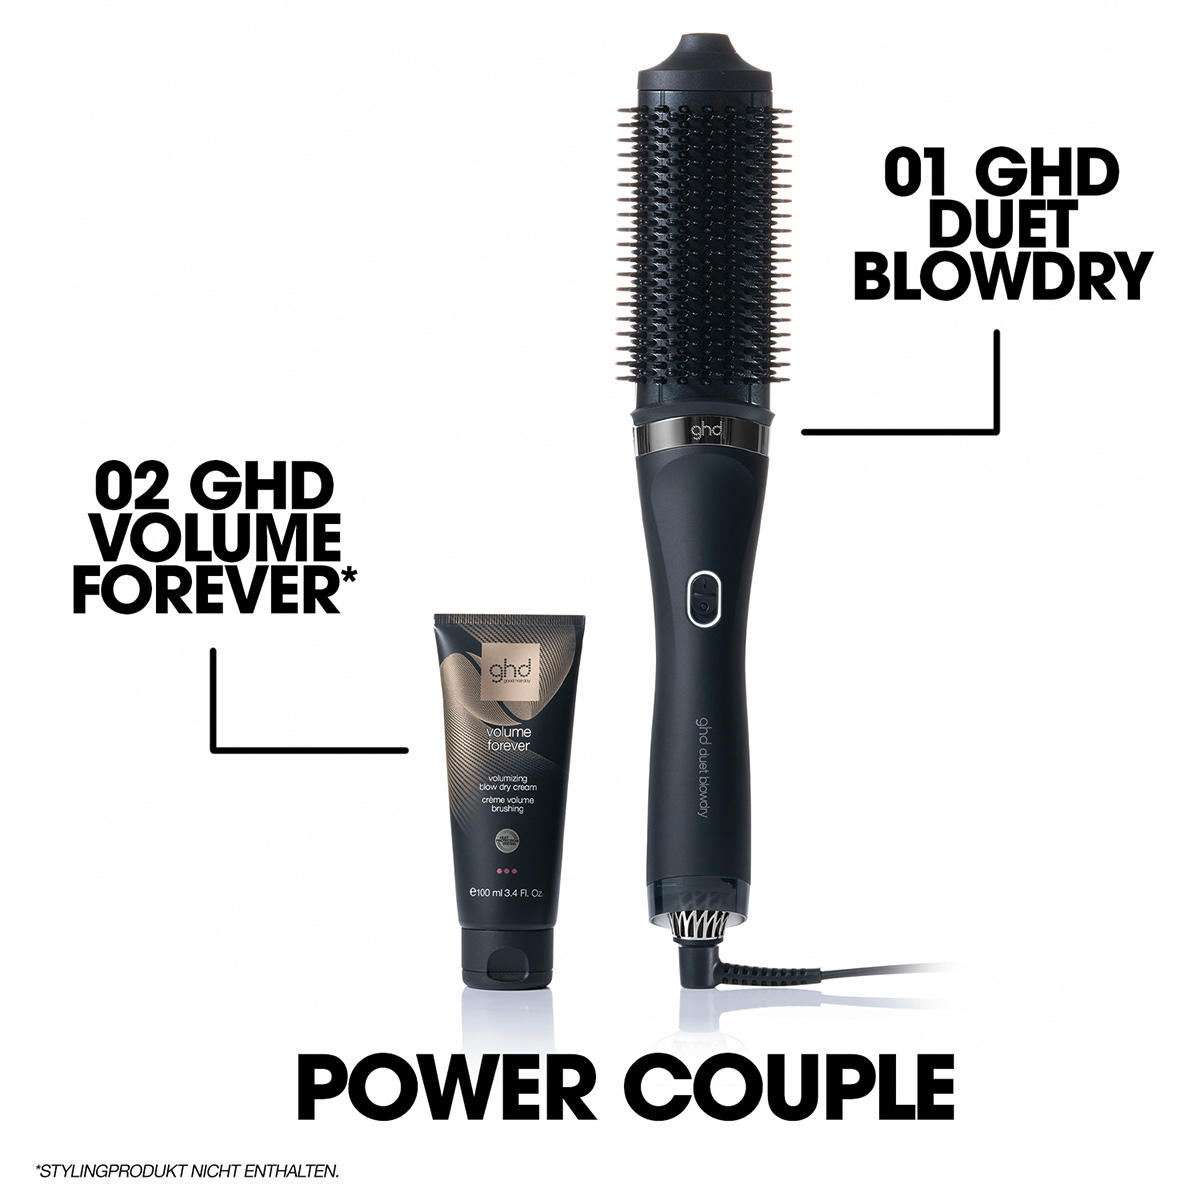 ghd duet blowdry Hair Dryer Brush black - 10